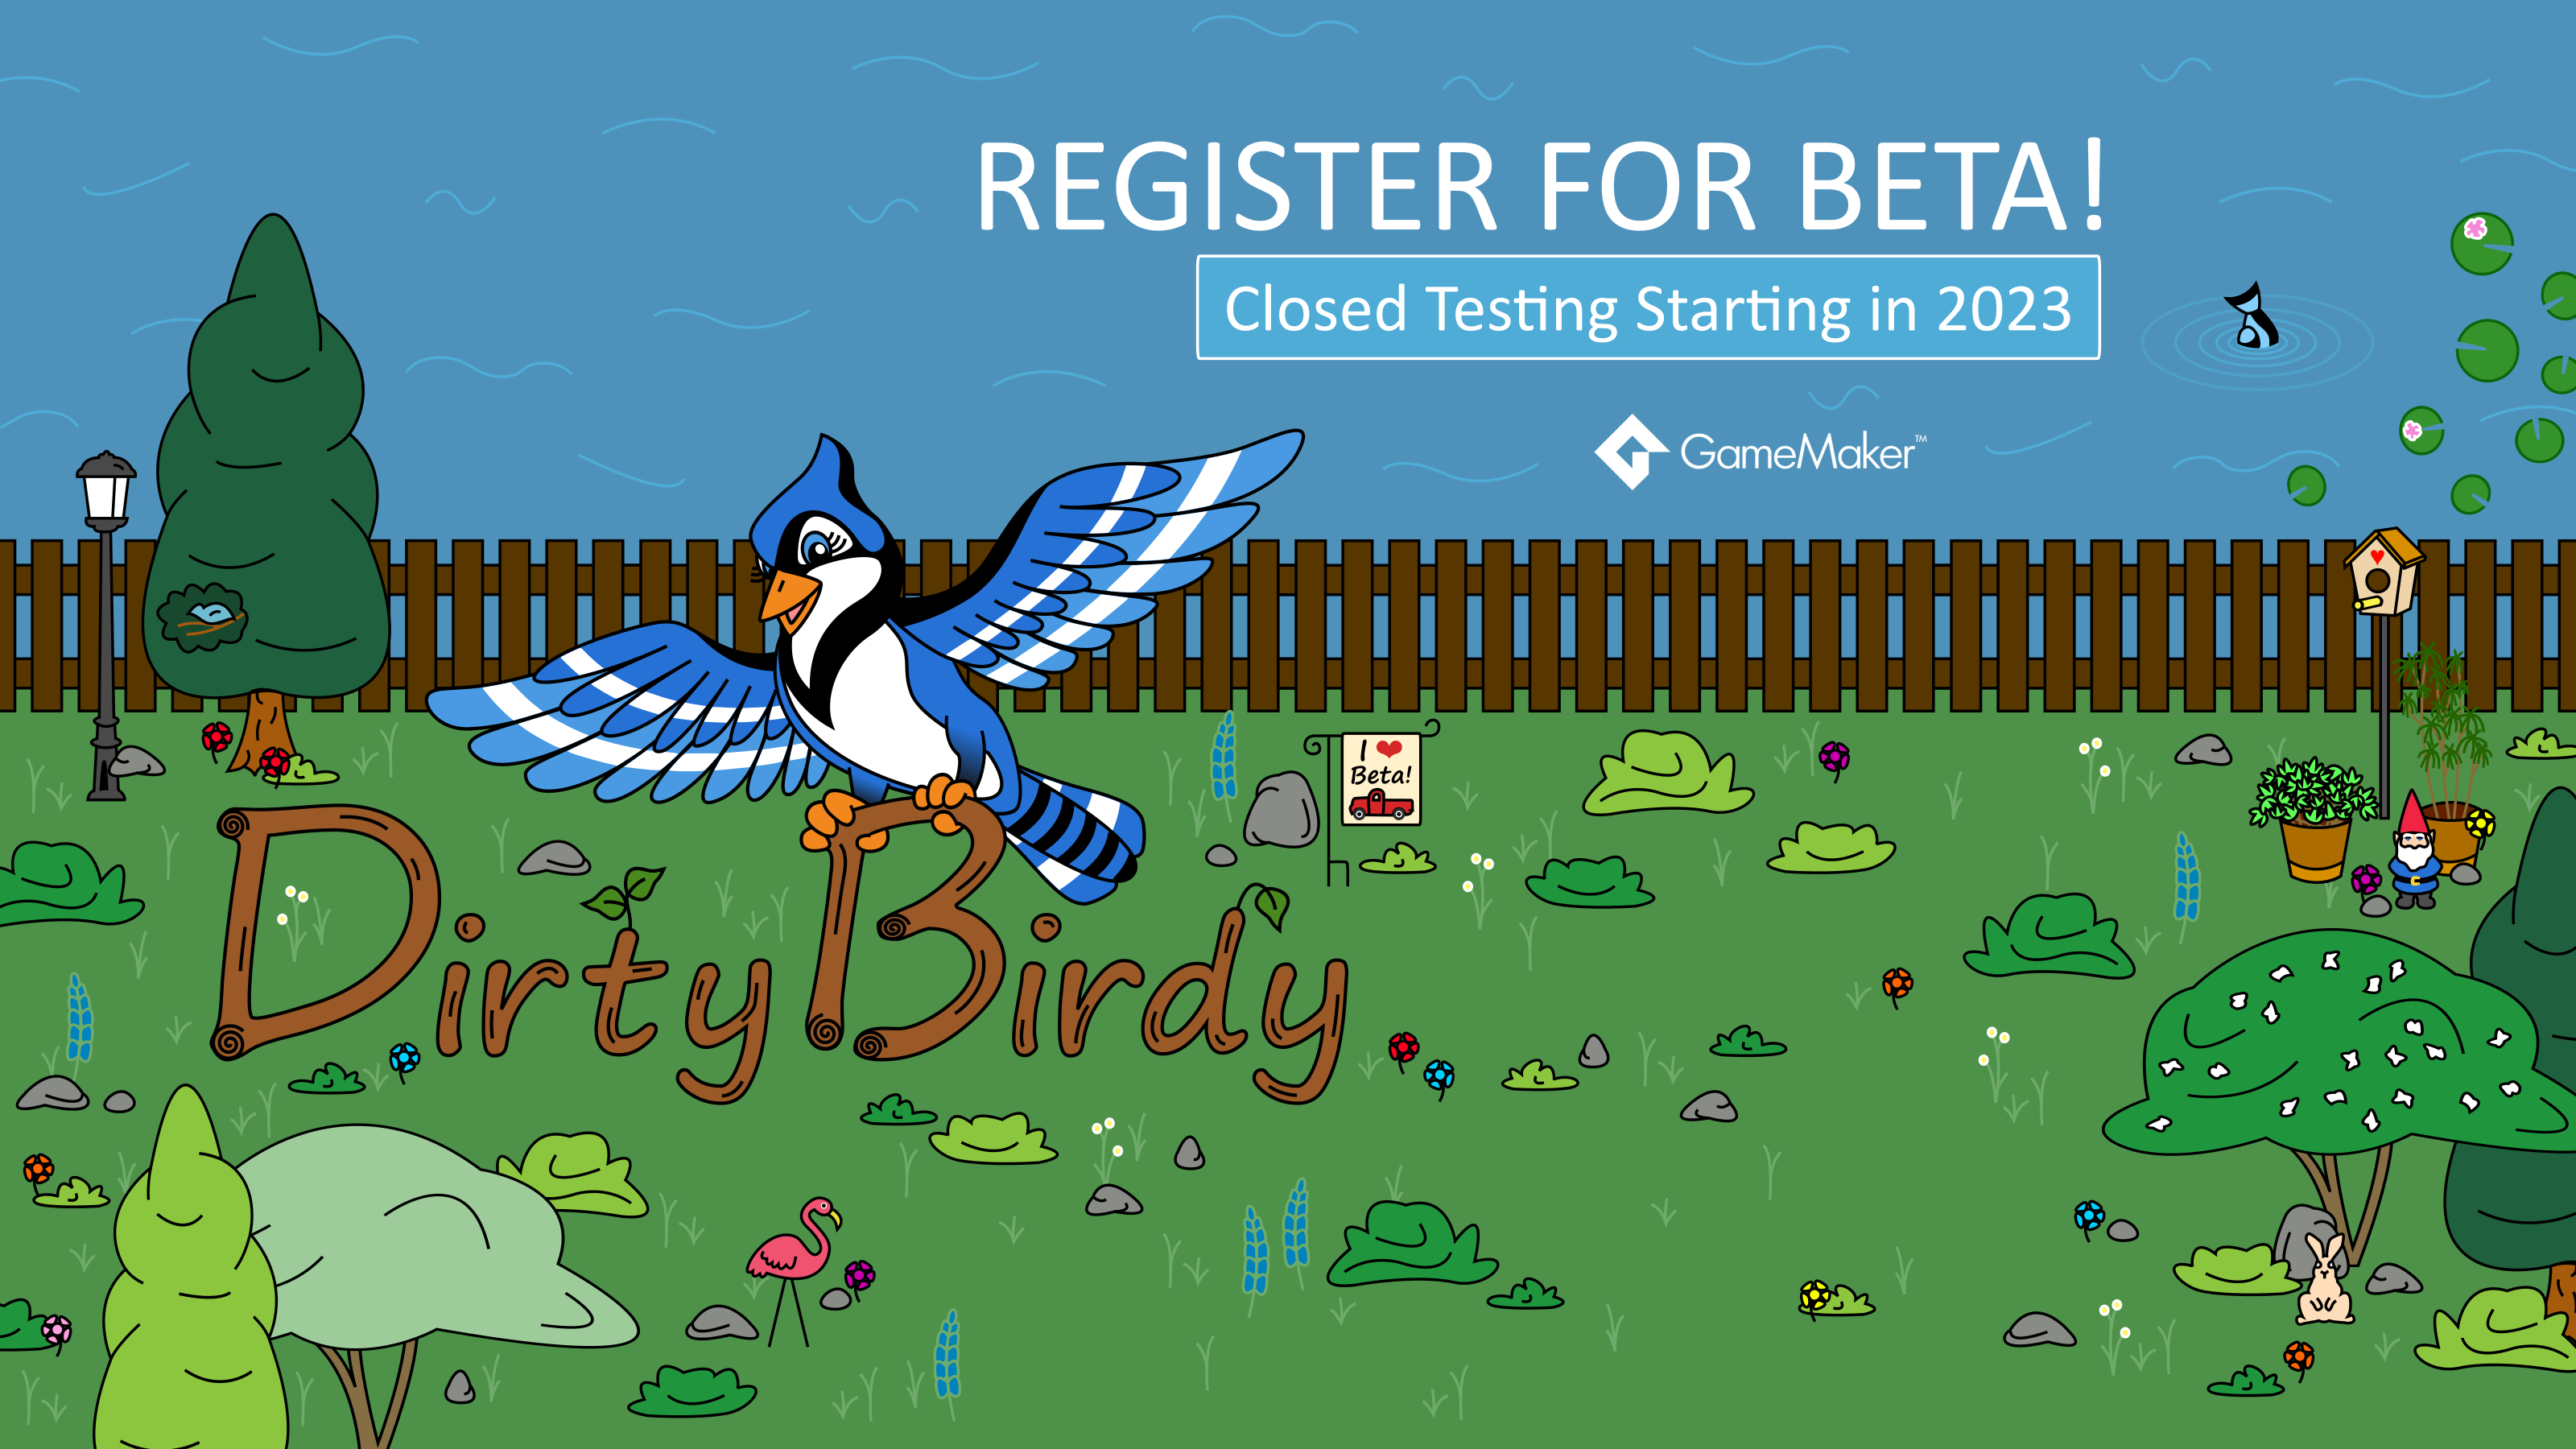 Dirty Birdy Register for Beta